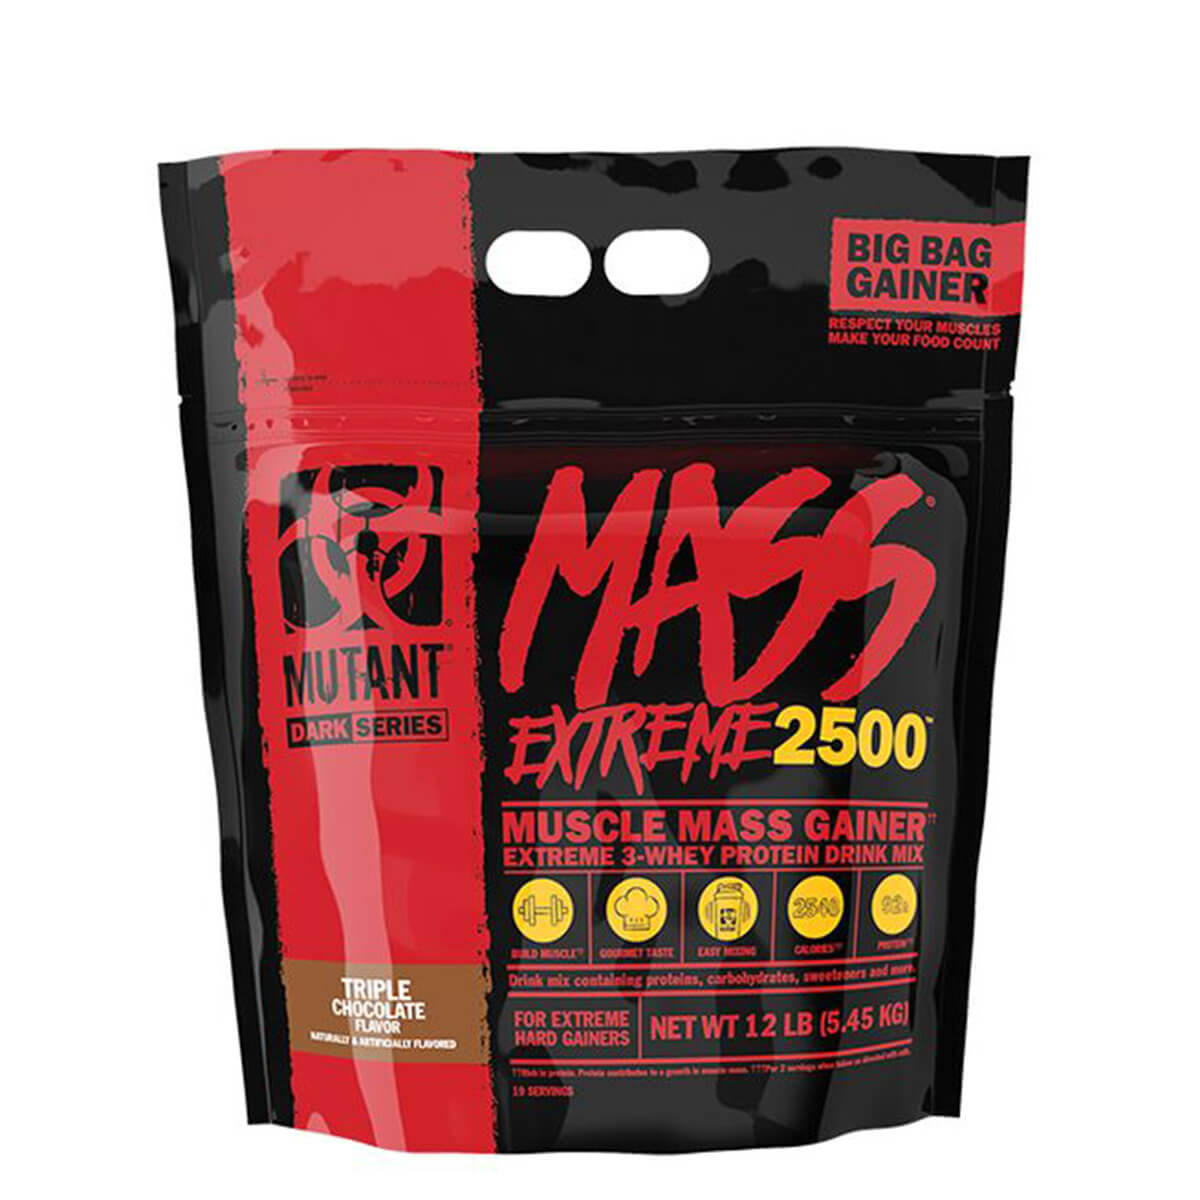 Mutant Mass Extreme 2500, 5,45 kg, Mutant